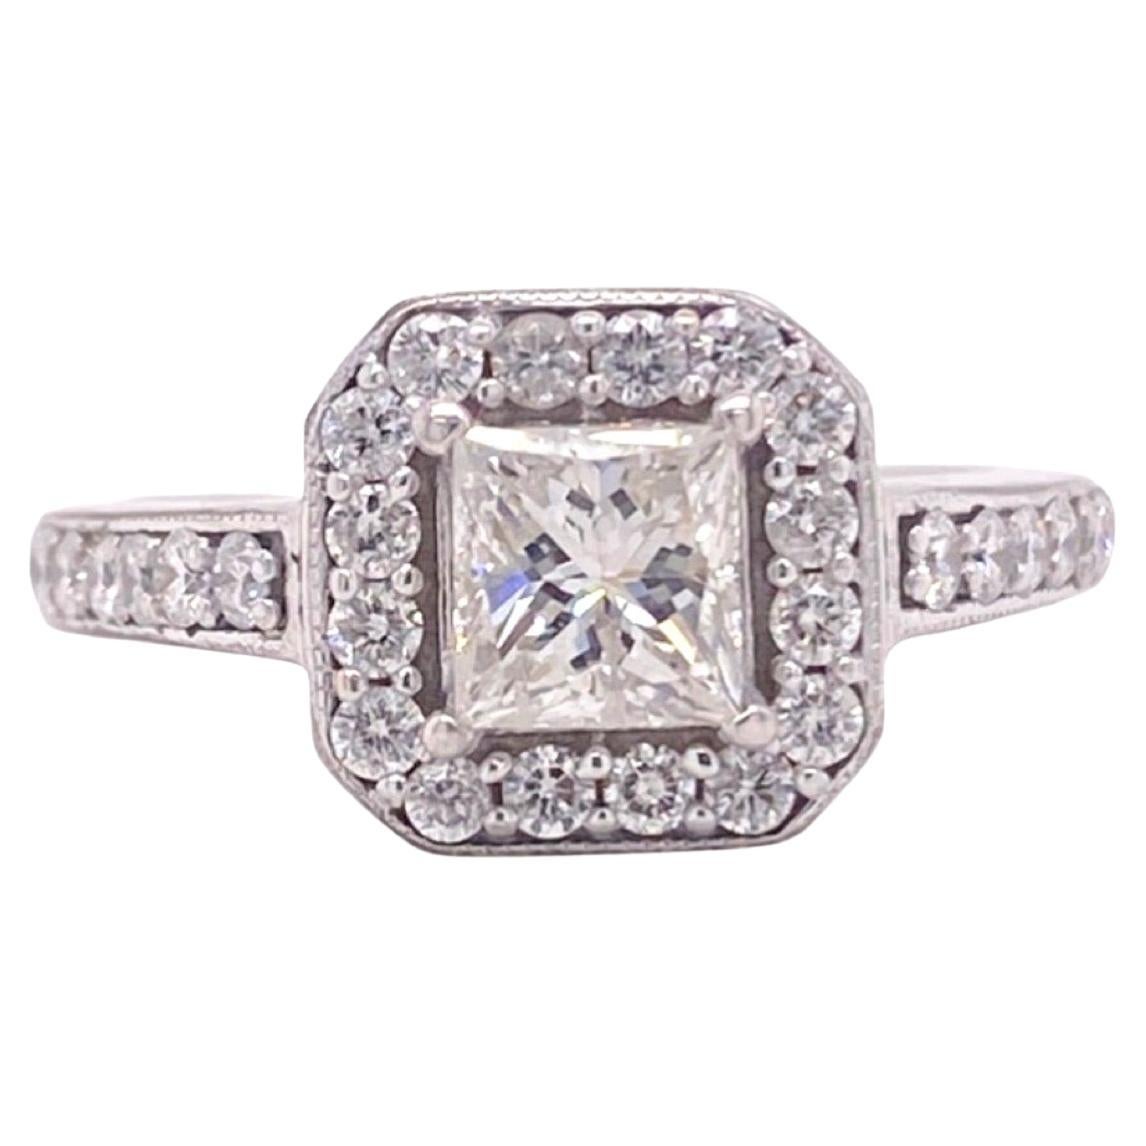 Princess Cut Diamond Halo Engagement Ring 1.45 Tcw 14kt White Gold